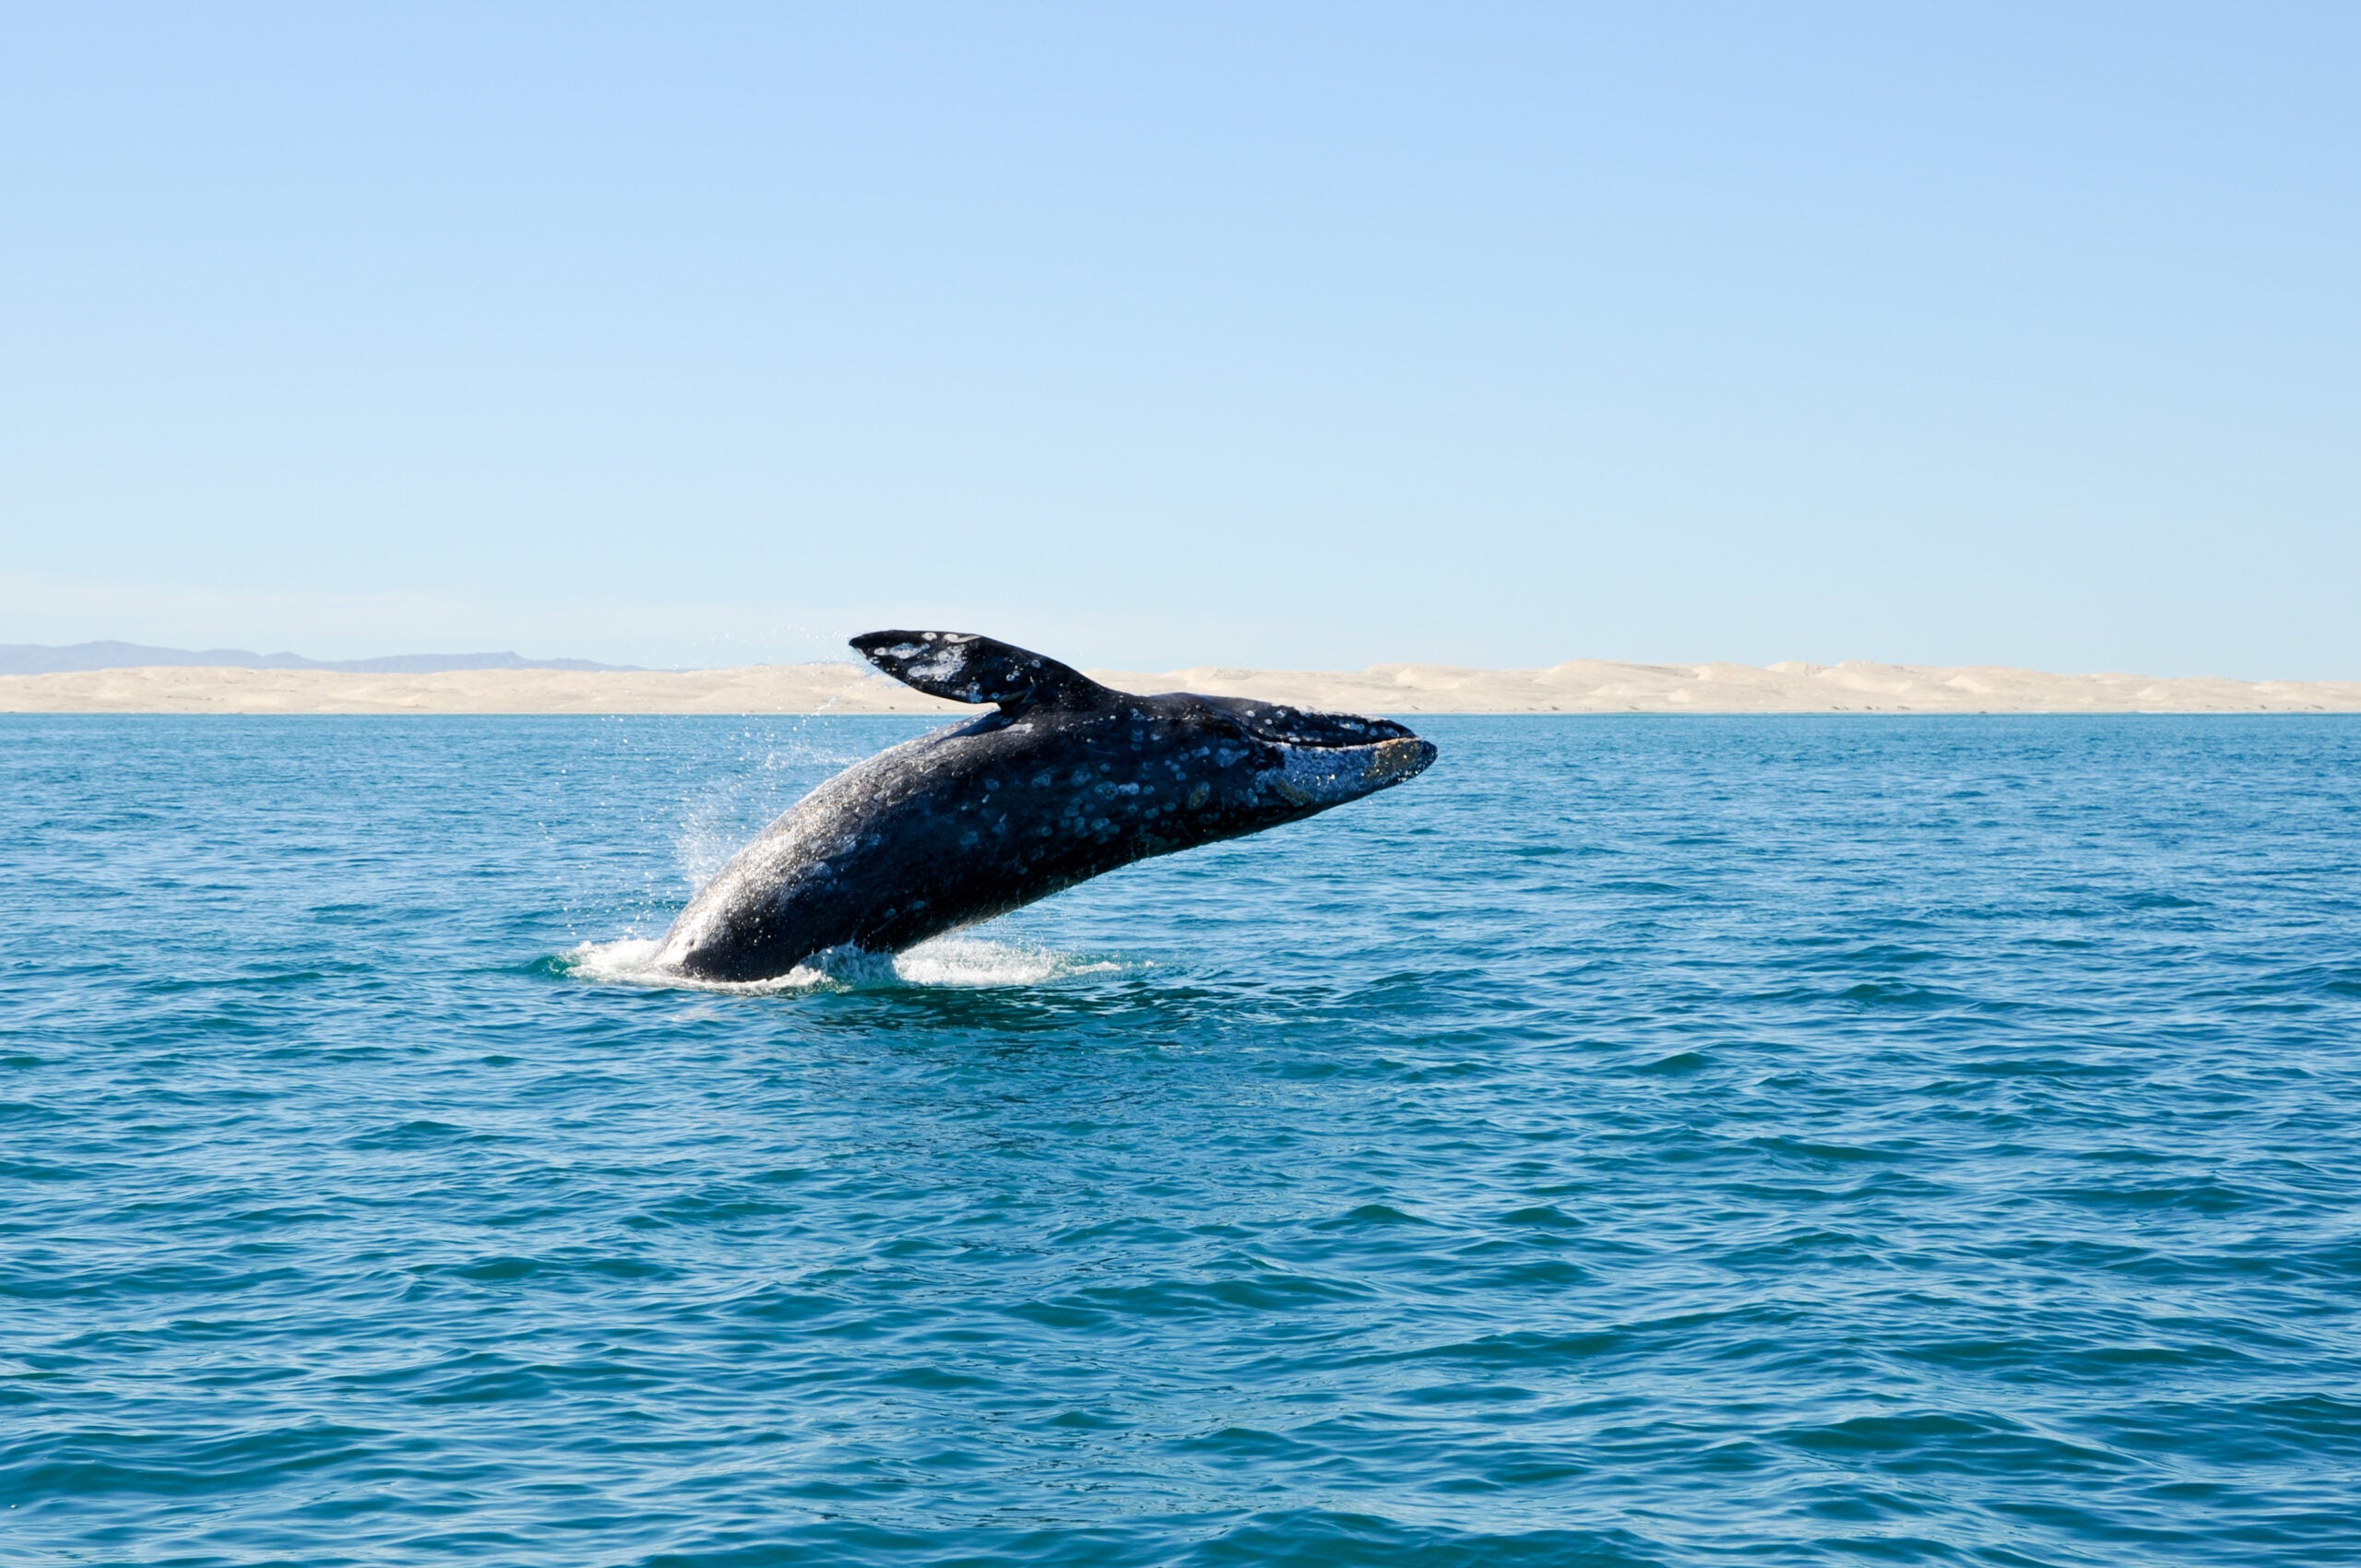 A breaching gray whale off the coast of Baja California Sur, Mexico.